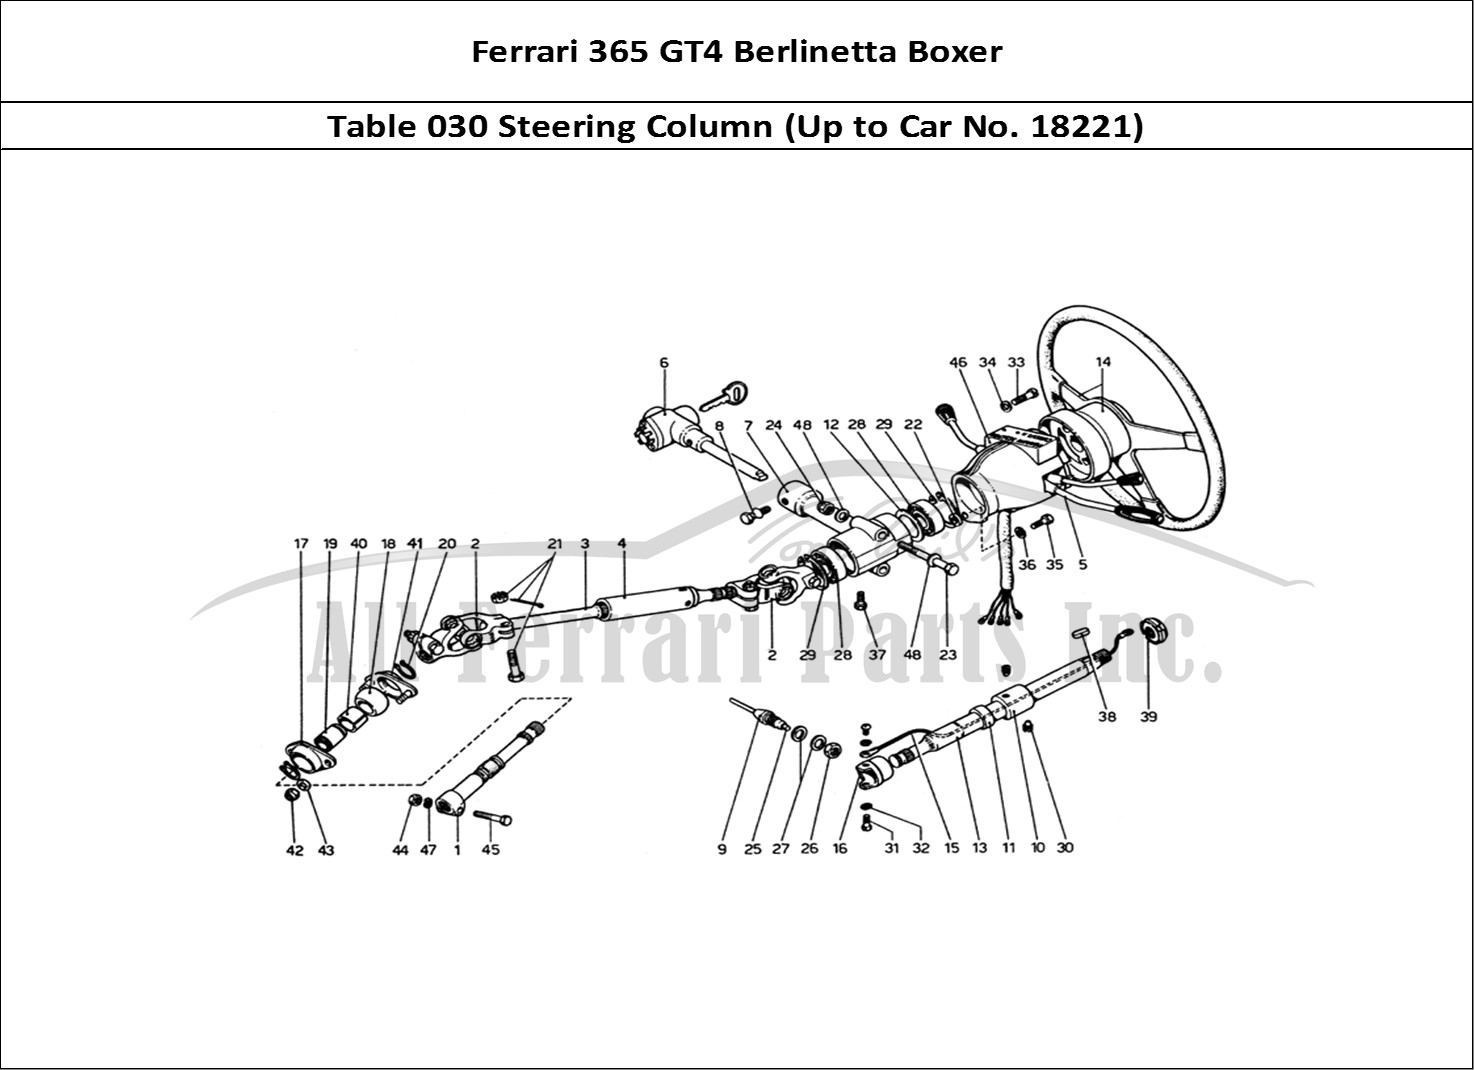 Ferrari Parts Ferrari 365 GT4 Berlinetta Boxer Page 030 Steering Column (Up To Ca